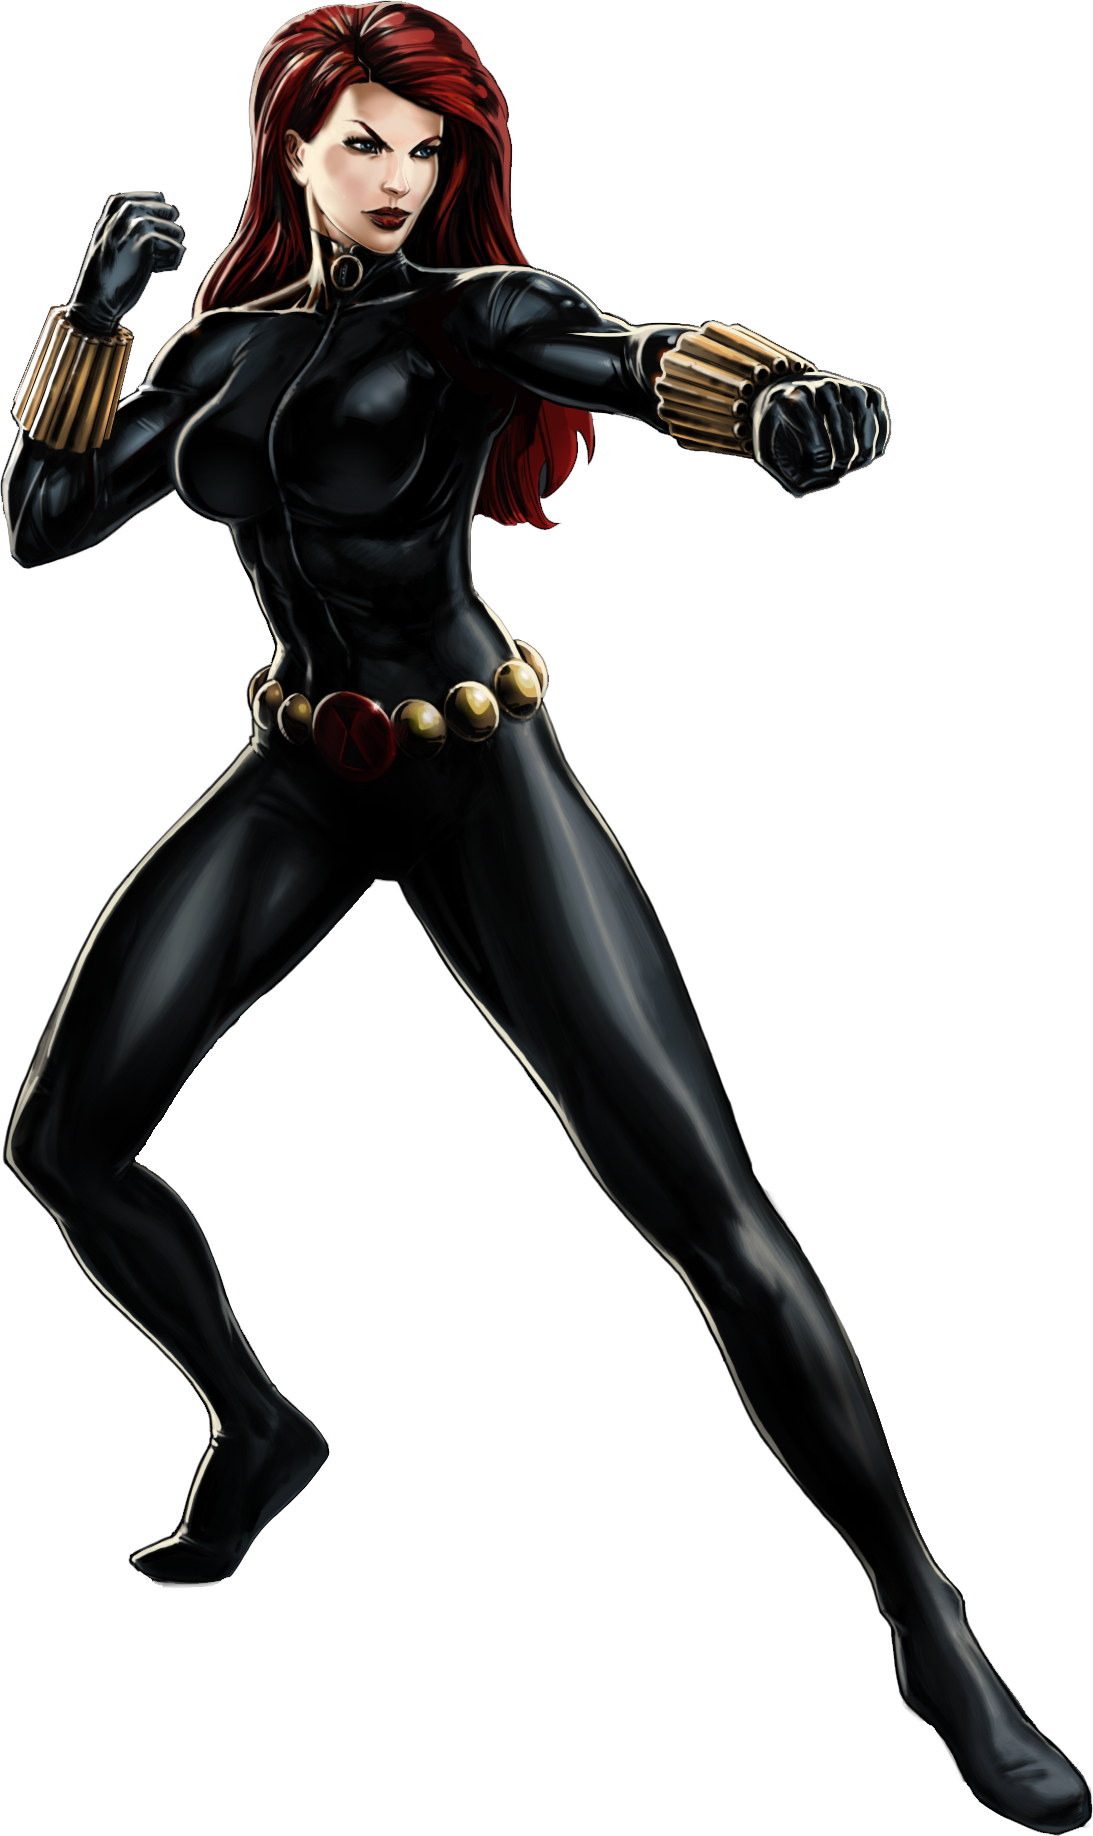 Black Widow Character Profile Wikia Fandom